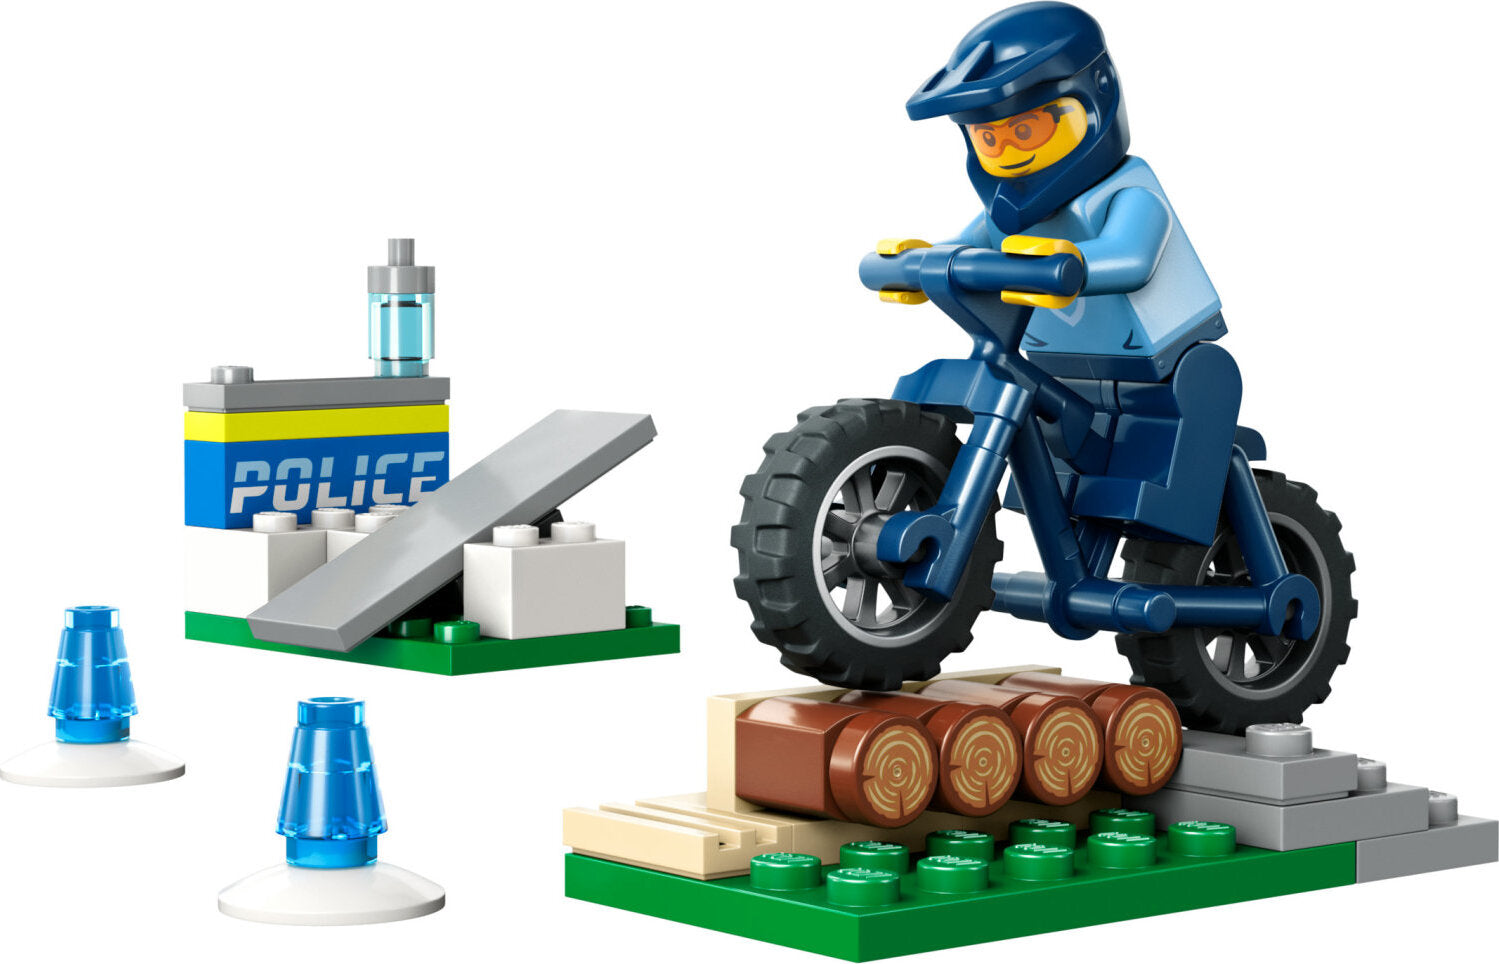 LEGO® City: Police Bicycle Training